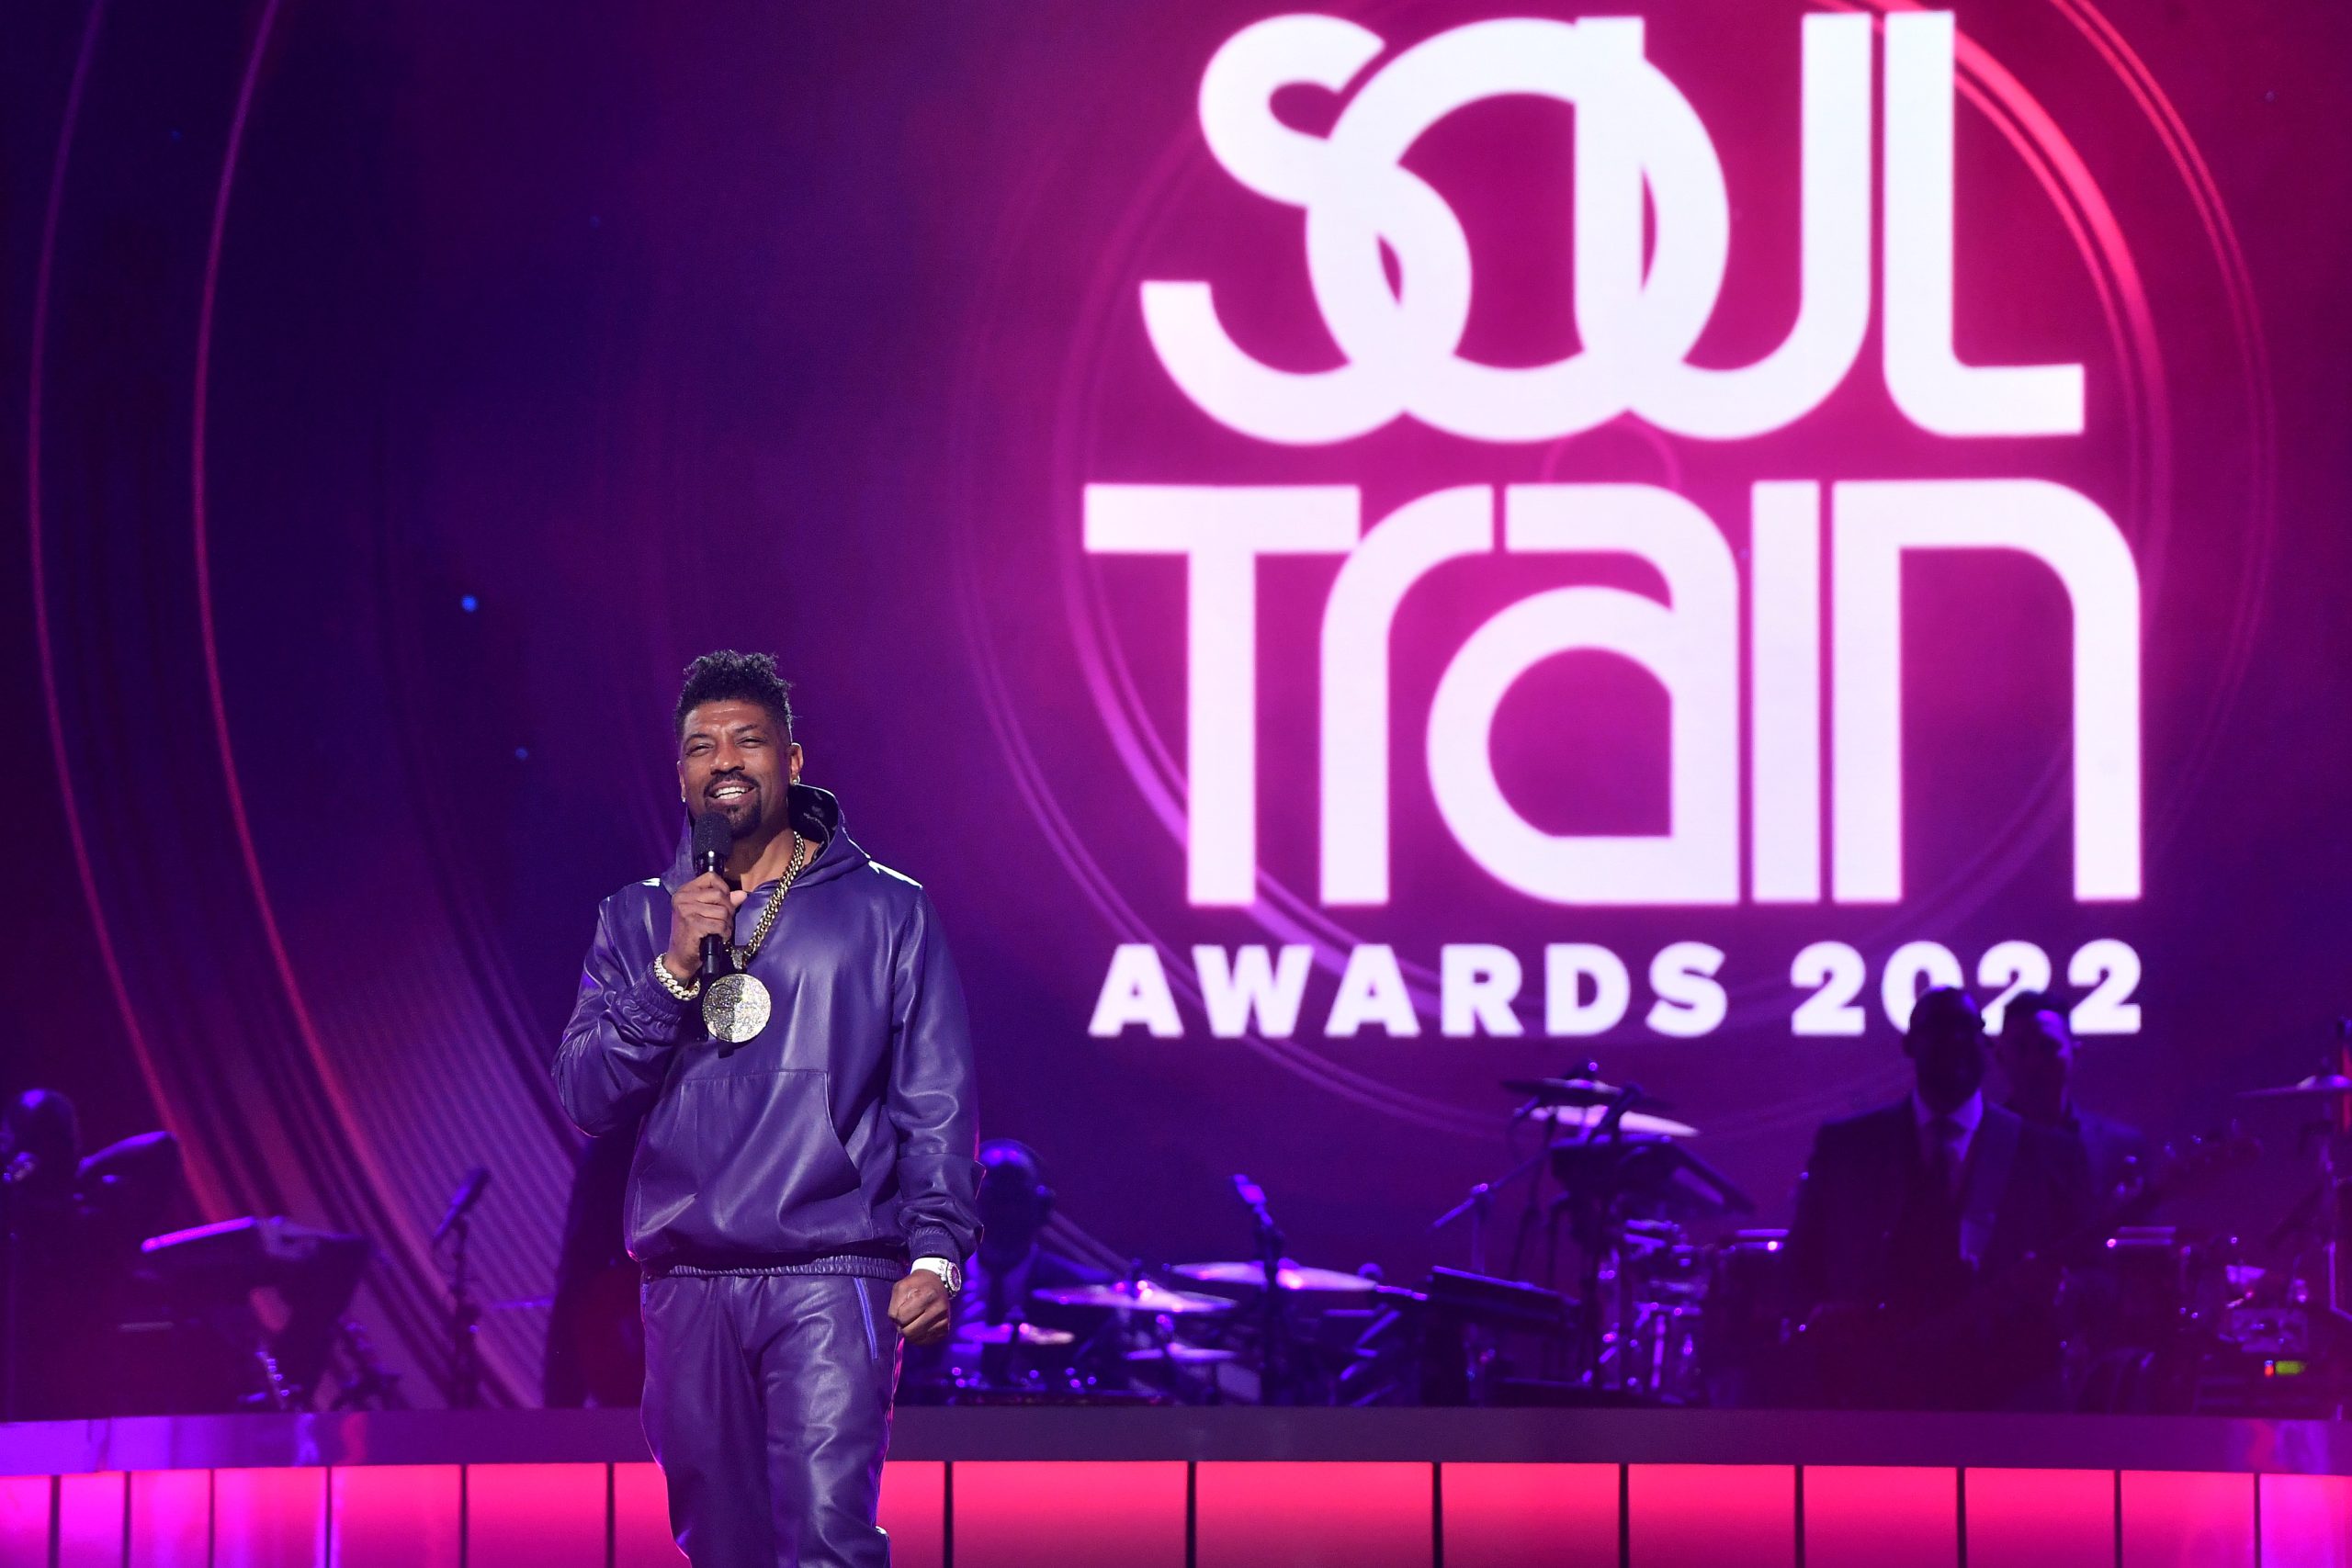 Soul Train Awards 2022 Tickets Las Vegas